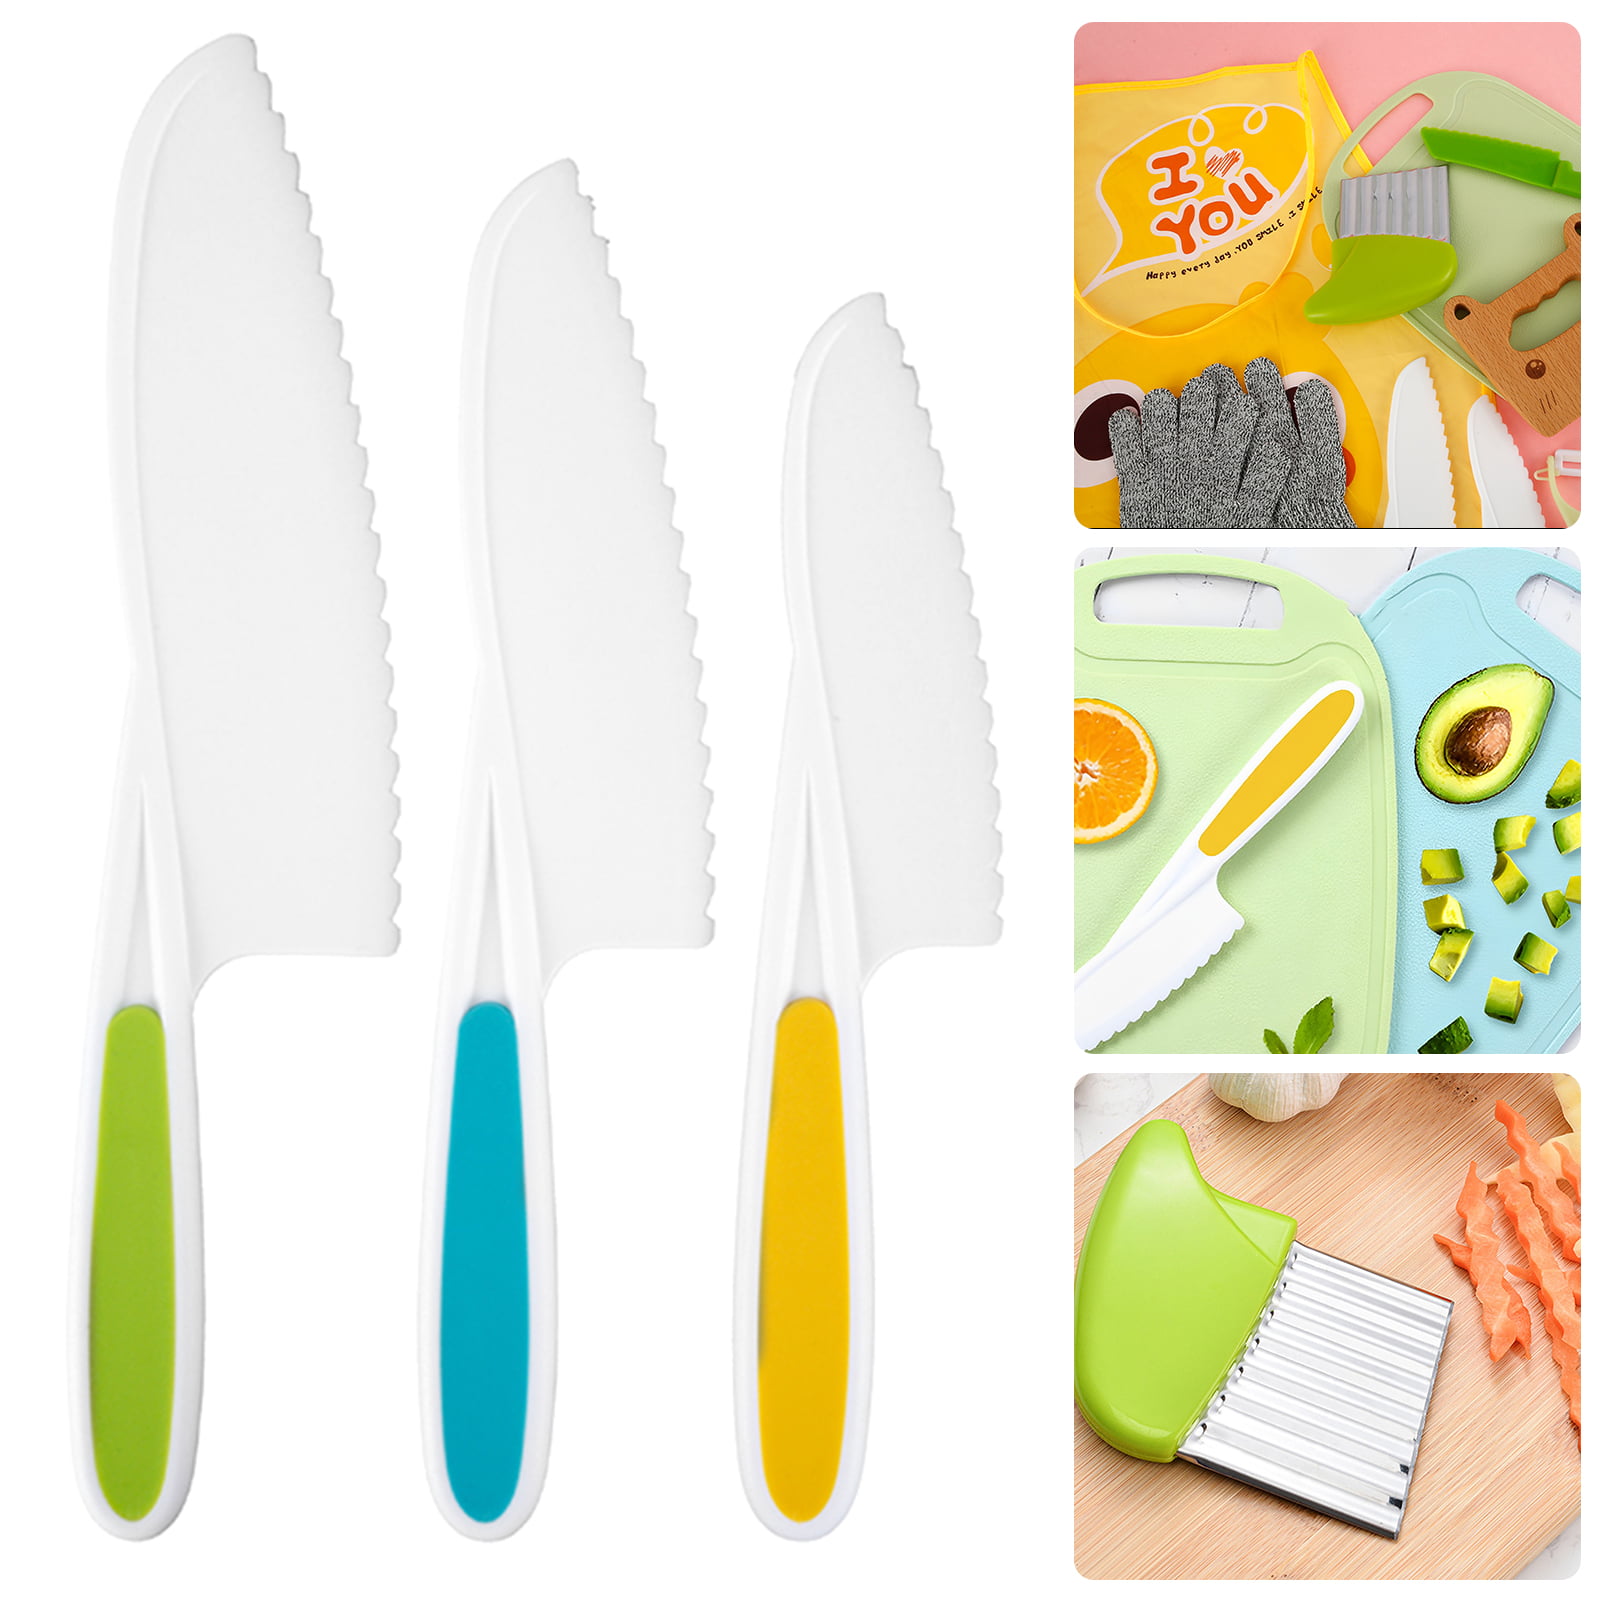 Wooden Knife Set * Plastic Knife Set Includes Cute Pattern Wooden